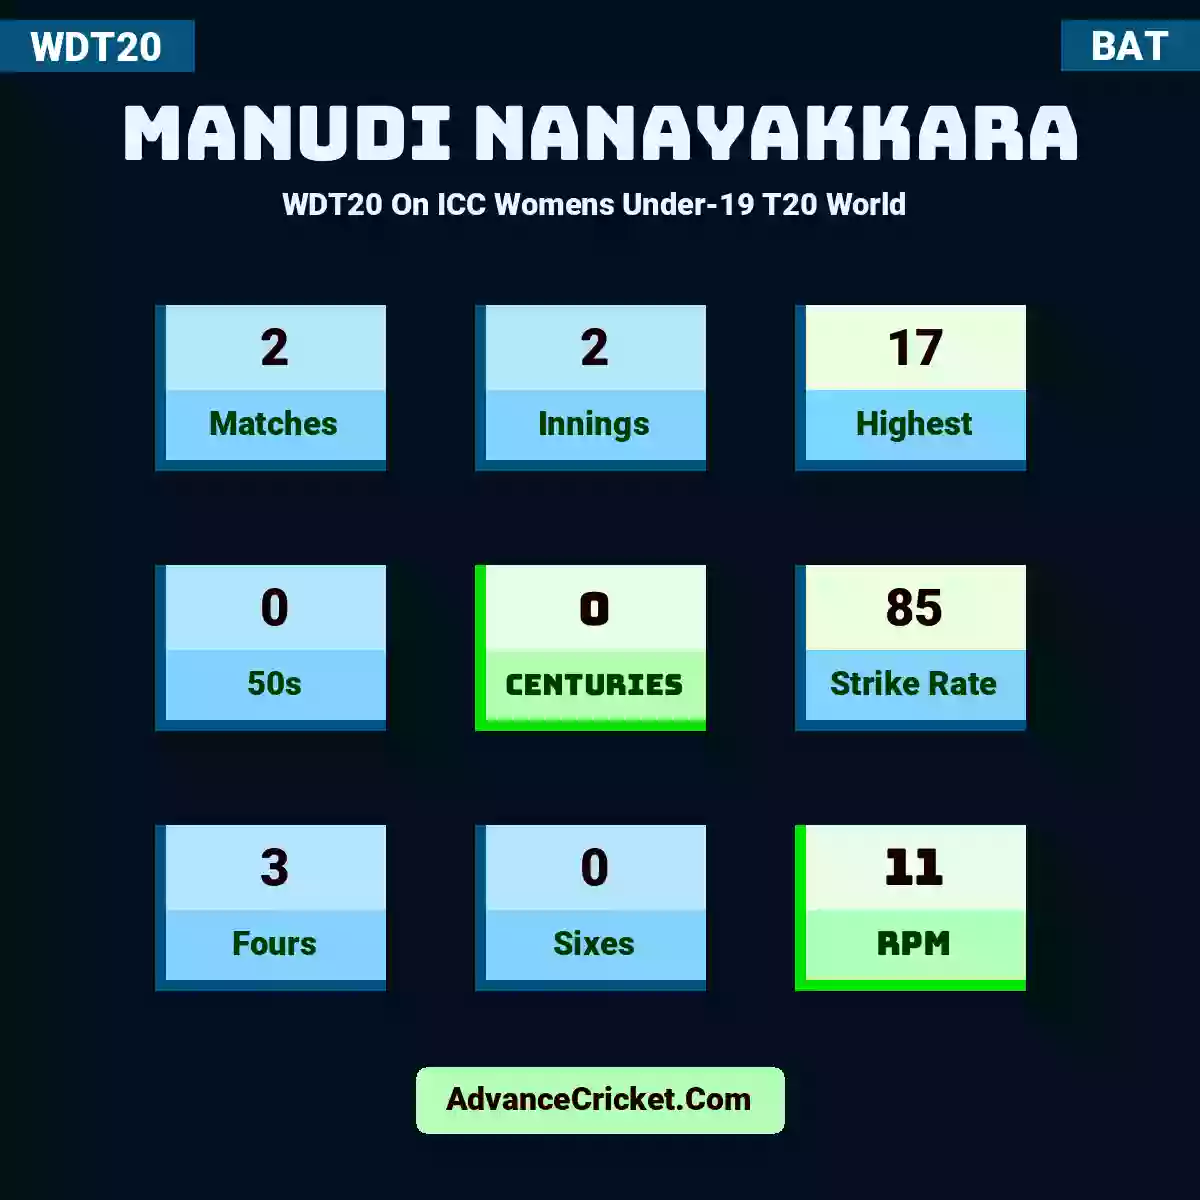 Manudi Nanayakkara WDT20  On ICC Womens Under-19 T20 World , Manudi Nanayakkara played 2 matches, scored 17 runs as highest, 0 half-centuries, and 0 centuries, with a strike rate of 85. M.Nanayakkara hit 3 fours and 0 sixes, with an RPM of 11.